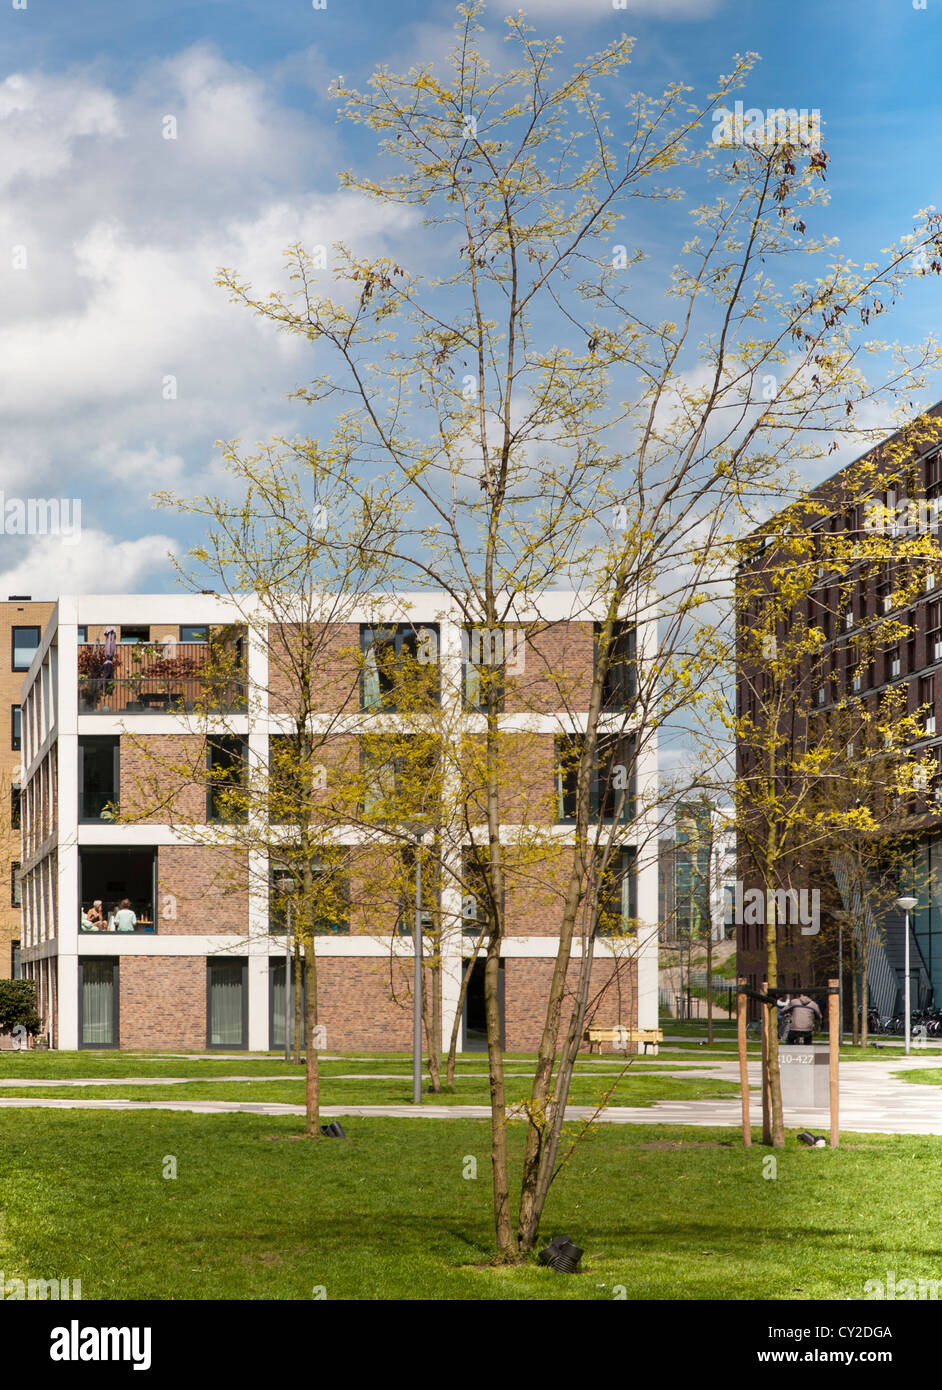 Contemporary housing, Amsterdam, Netherlands Stock Photo